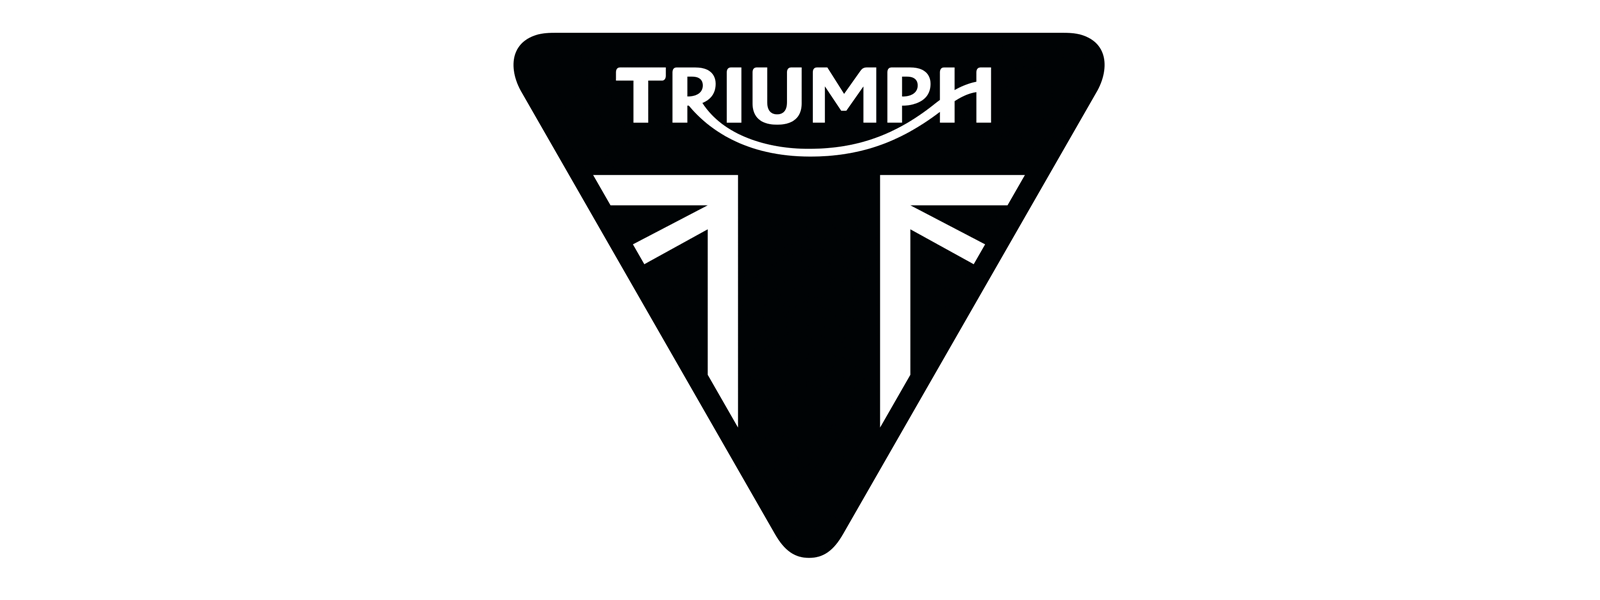 Truimph Logo - Triumph logo | Motorcycle brands: logo, specs, history.